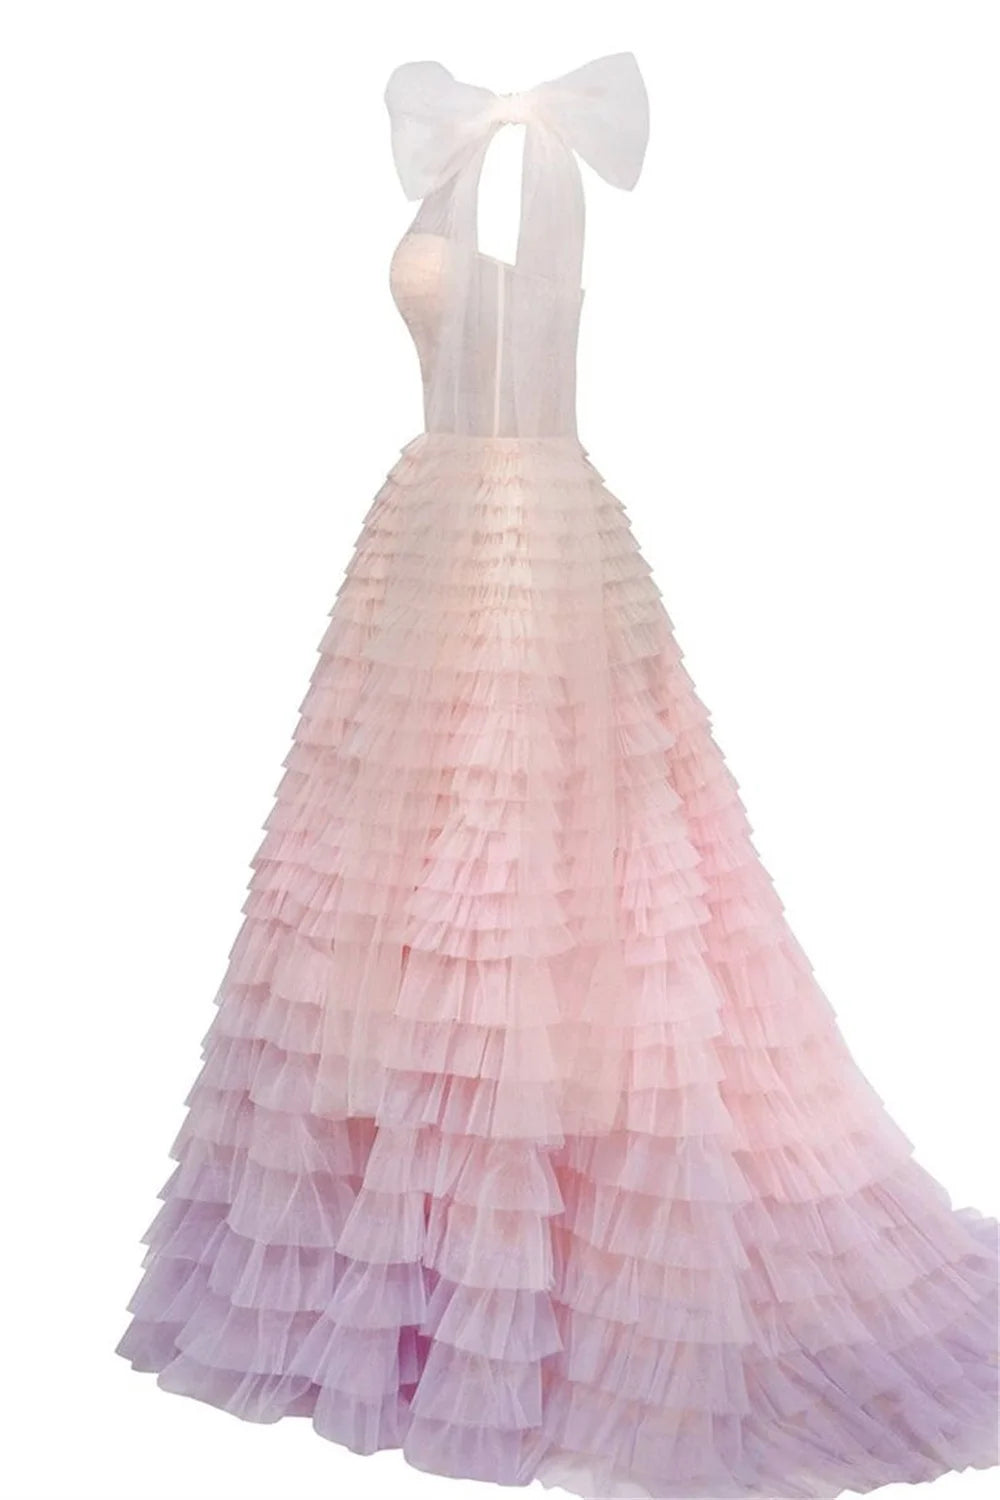 Gradient Pink Ball Gown Prom Dress Sweetheart One Shoulder فساتين السهرة Pleaded tidos de noche